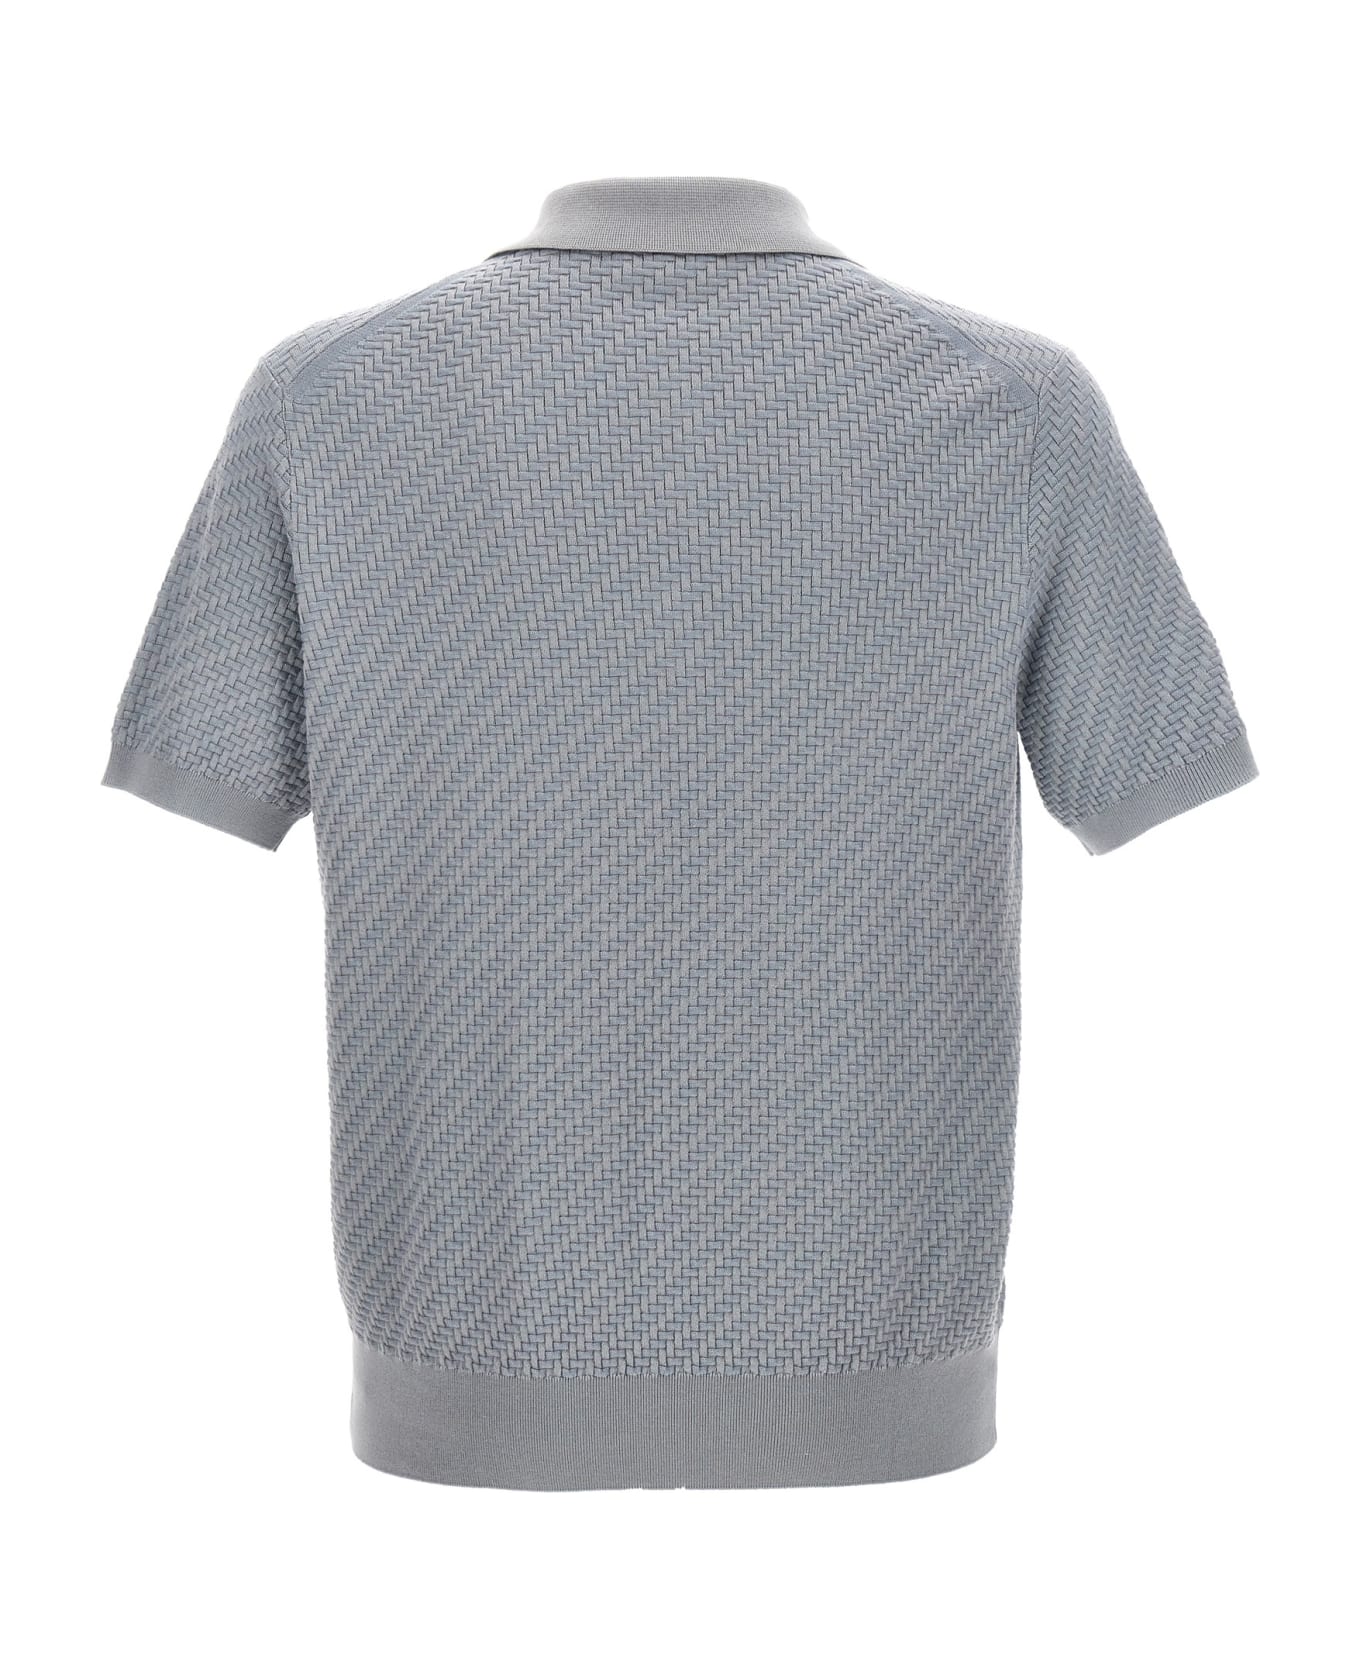 Brioni Woven Knit Polo Shirt - Light Blue